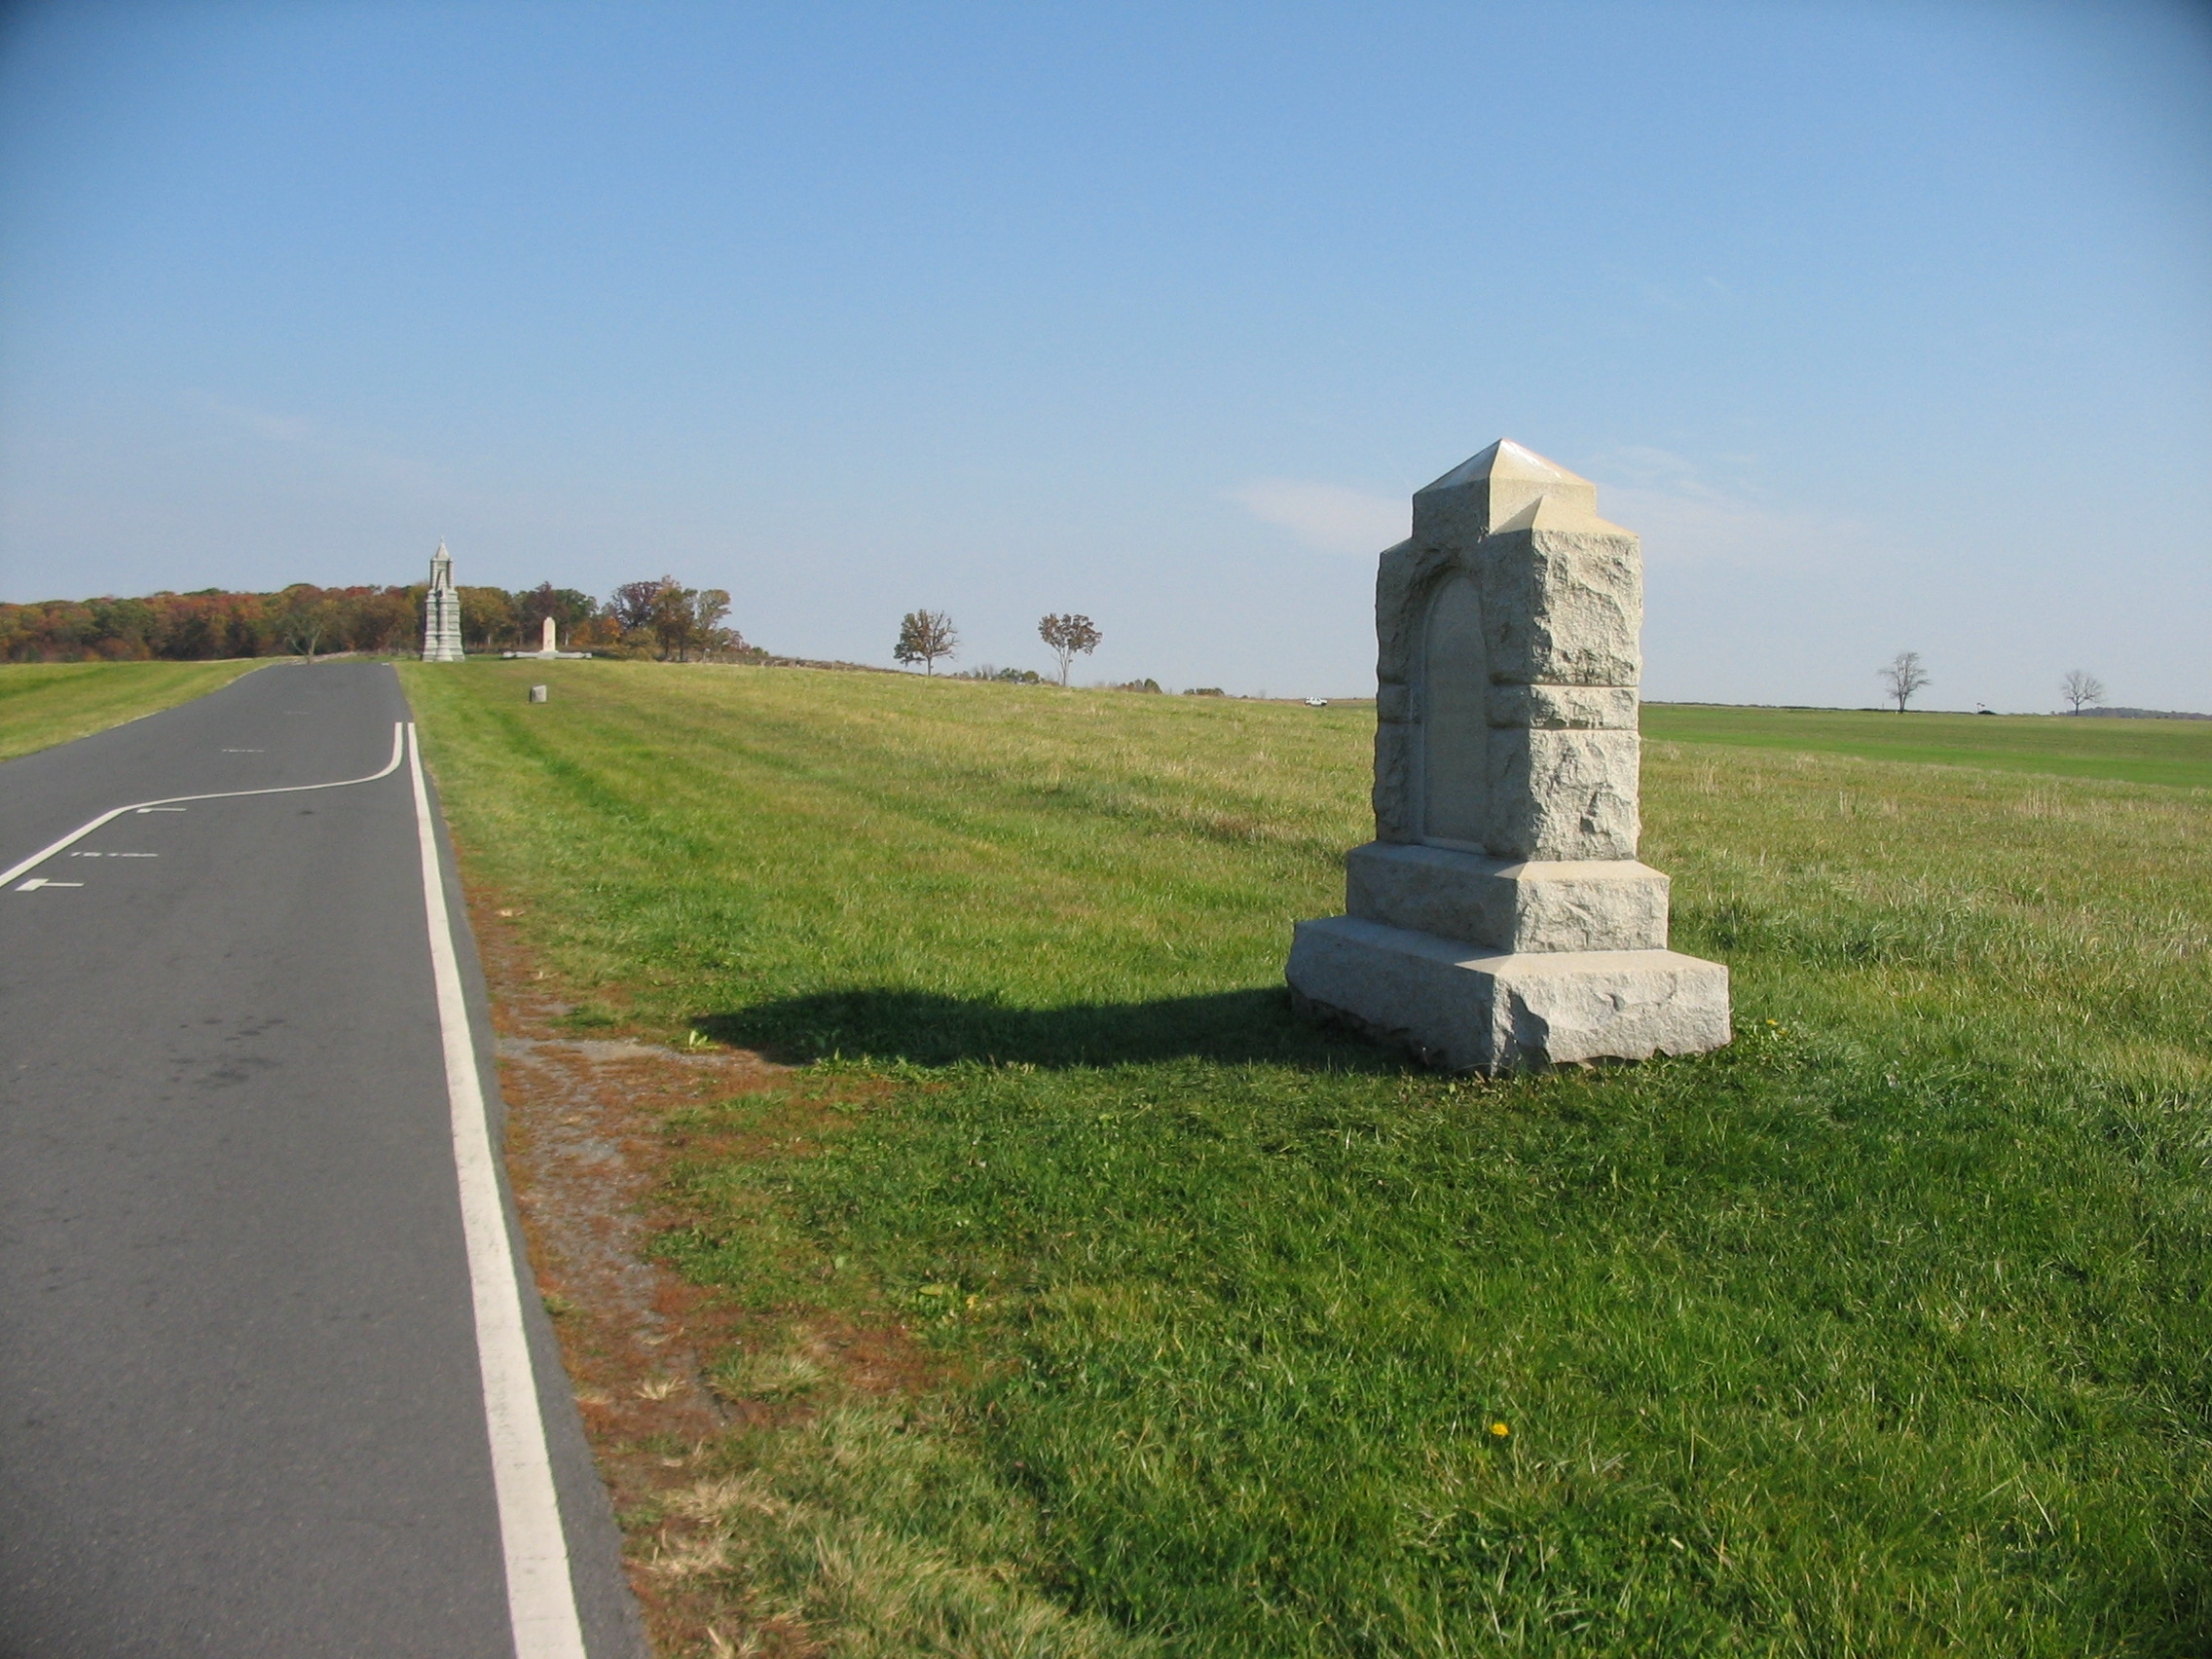 3rd West Virginia Cavalry Monument